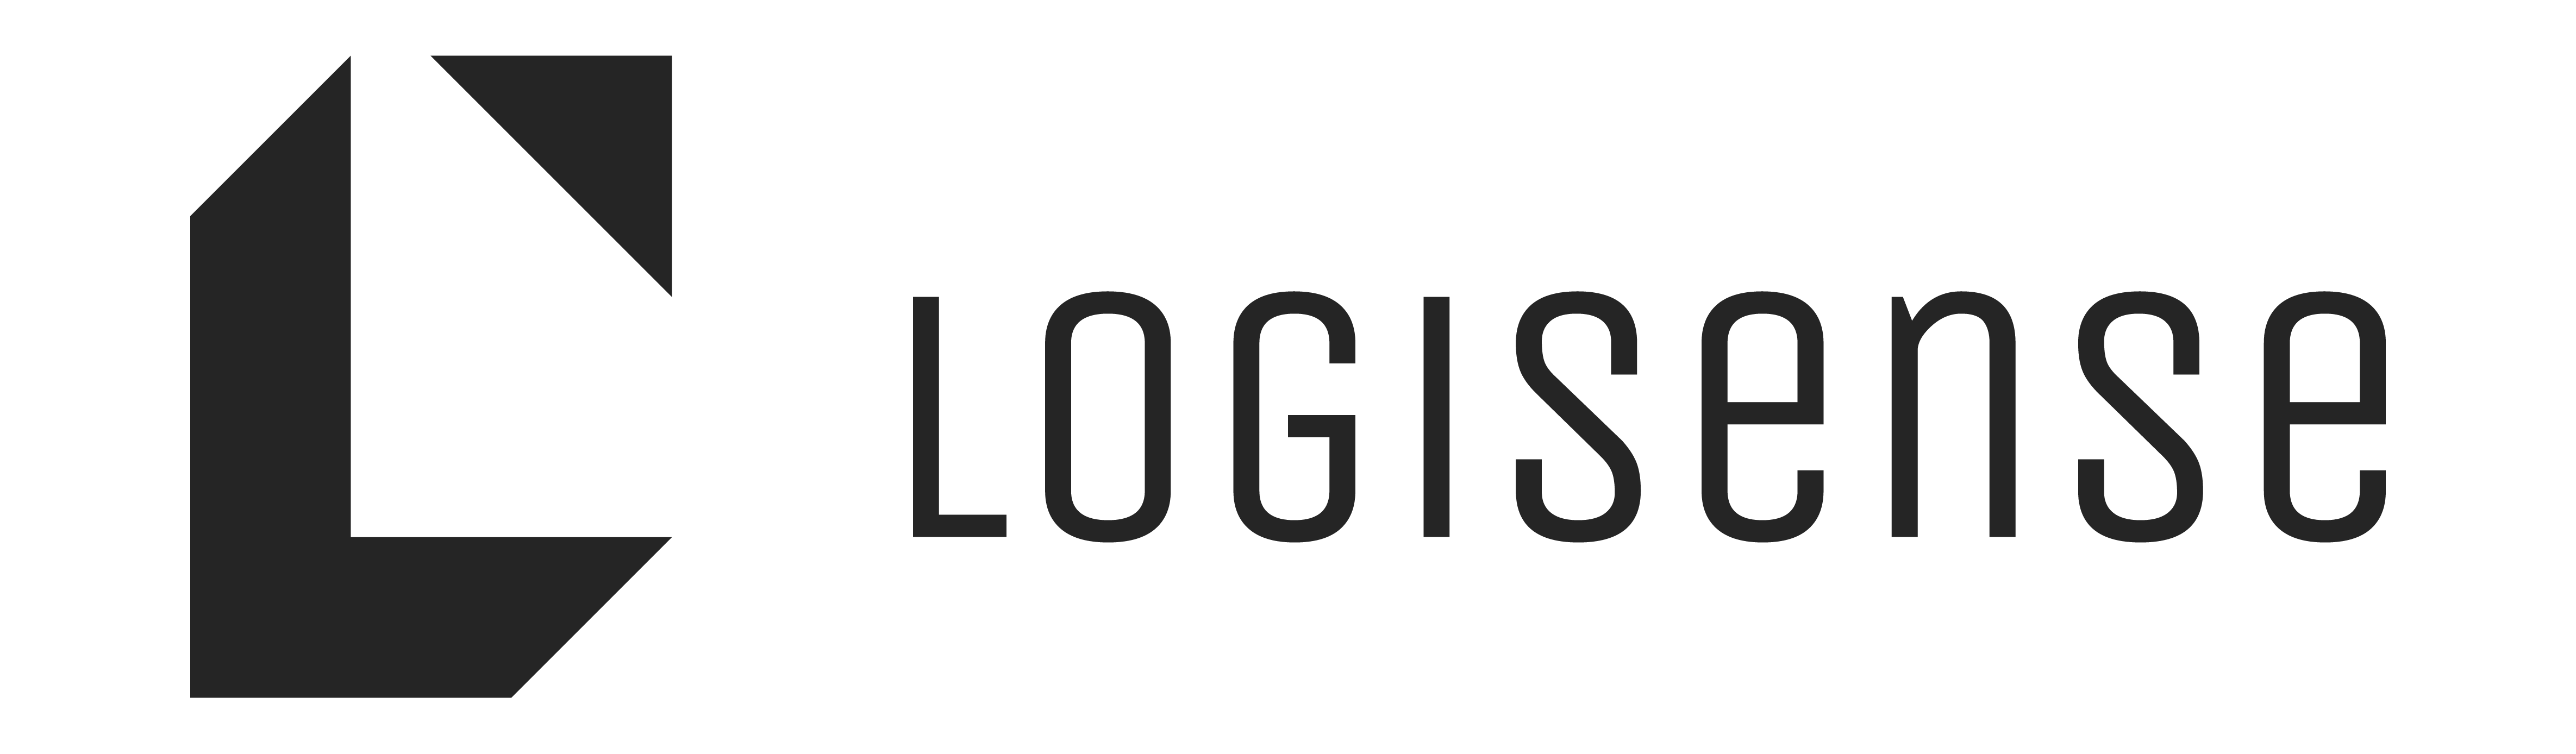 LogiSense-Logo.png